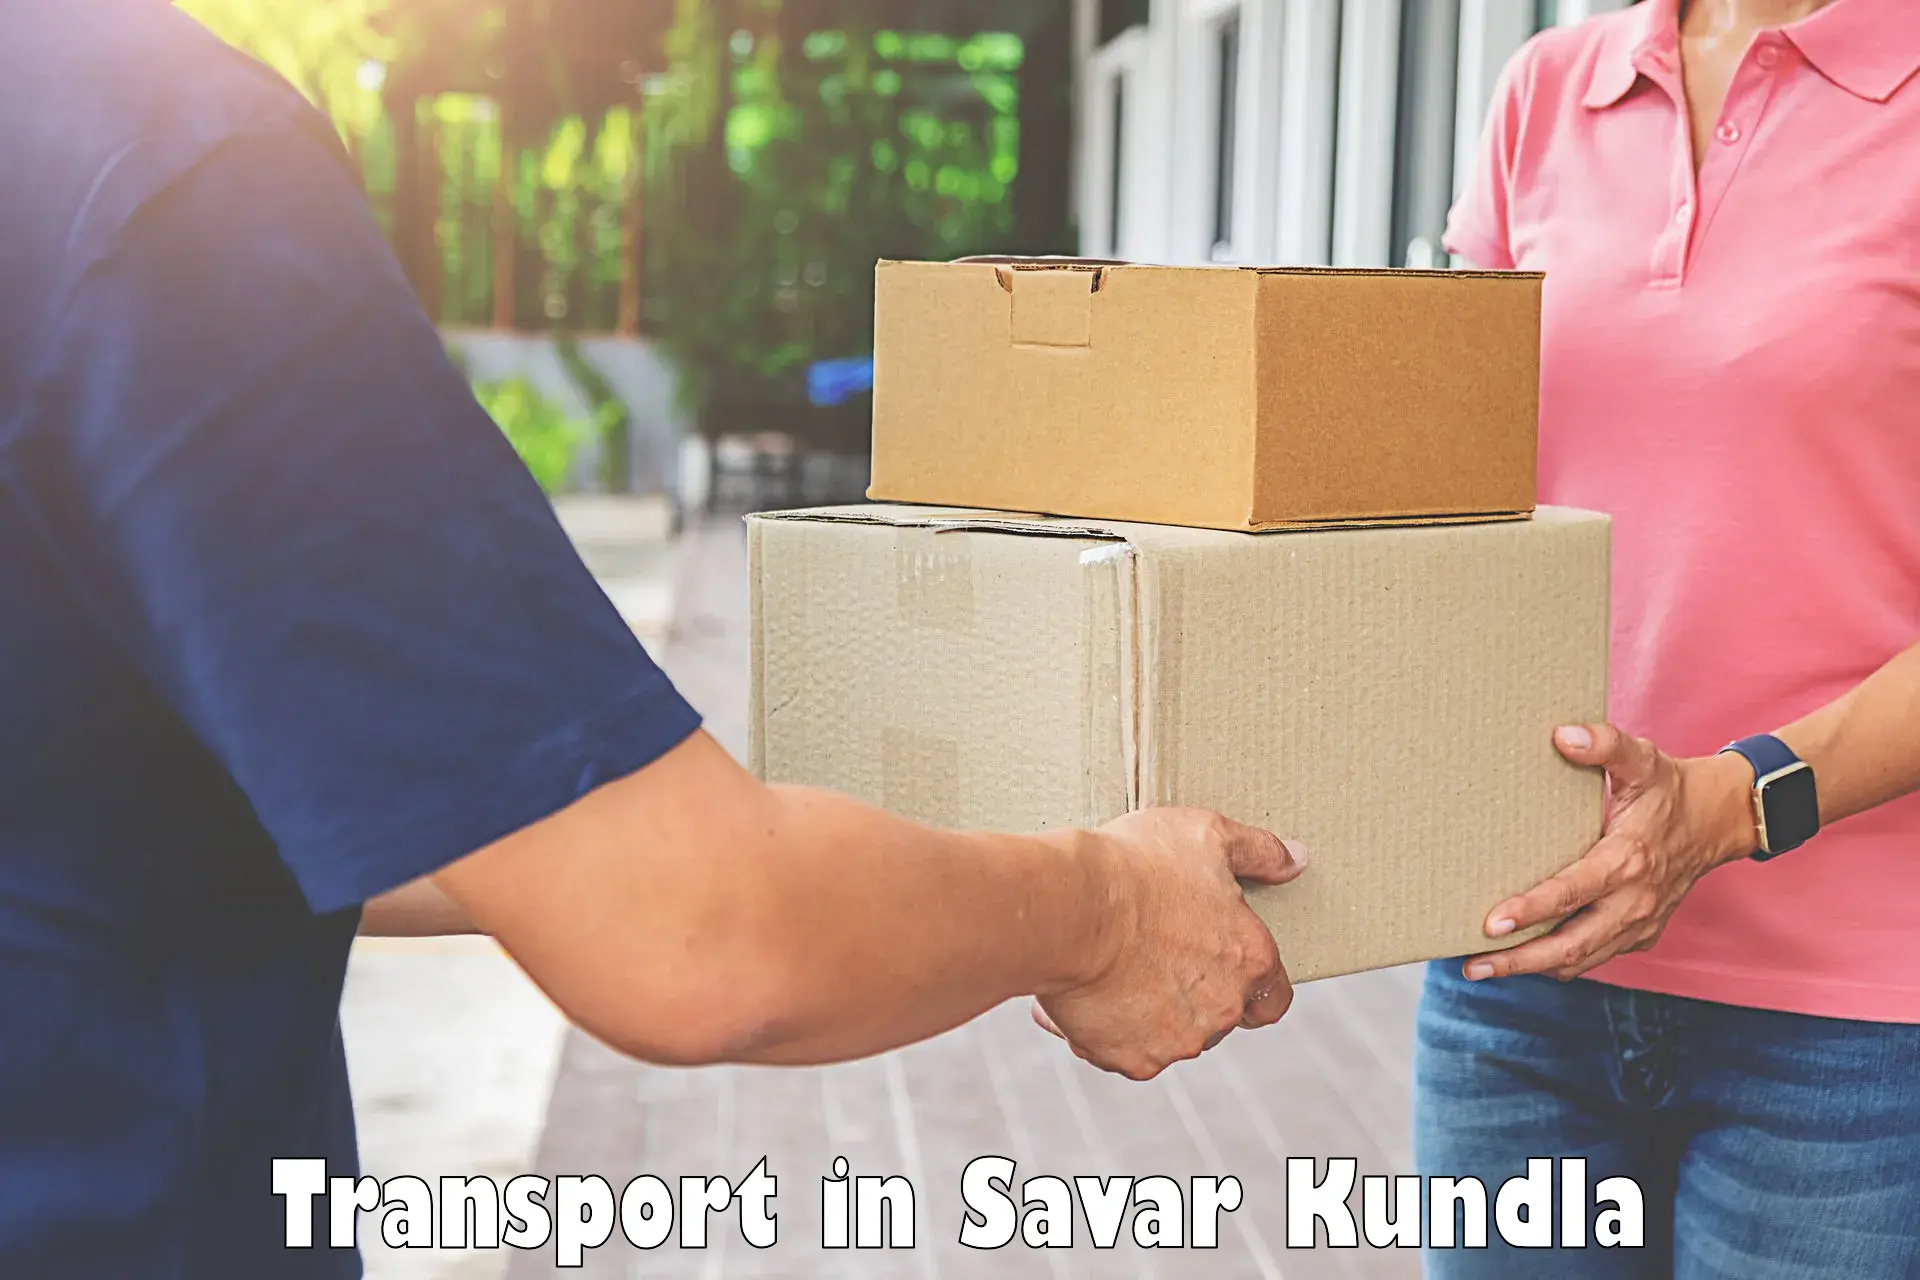 Daily parcel service transport in Savar Kundla